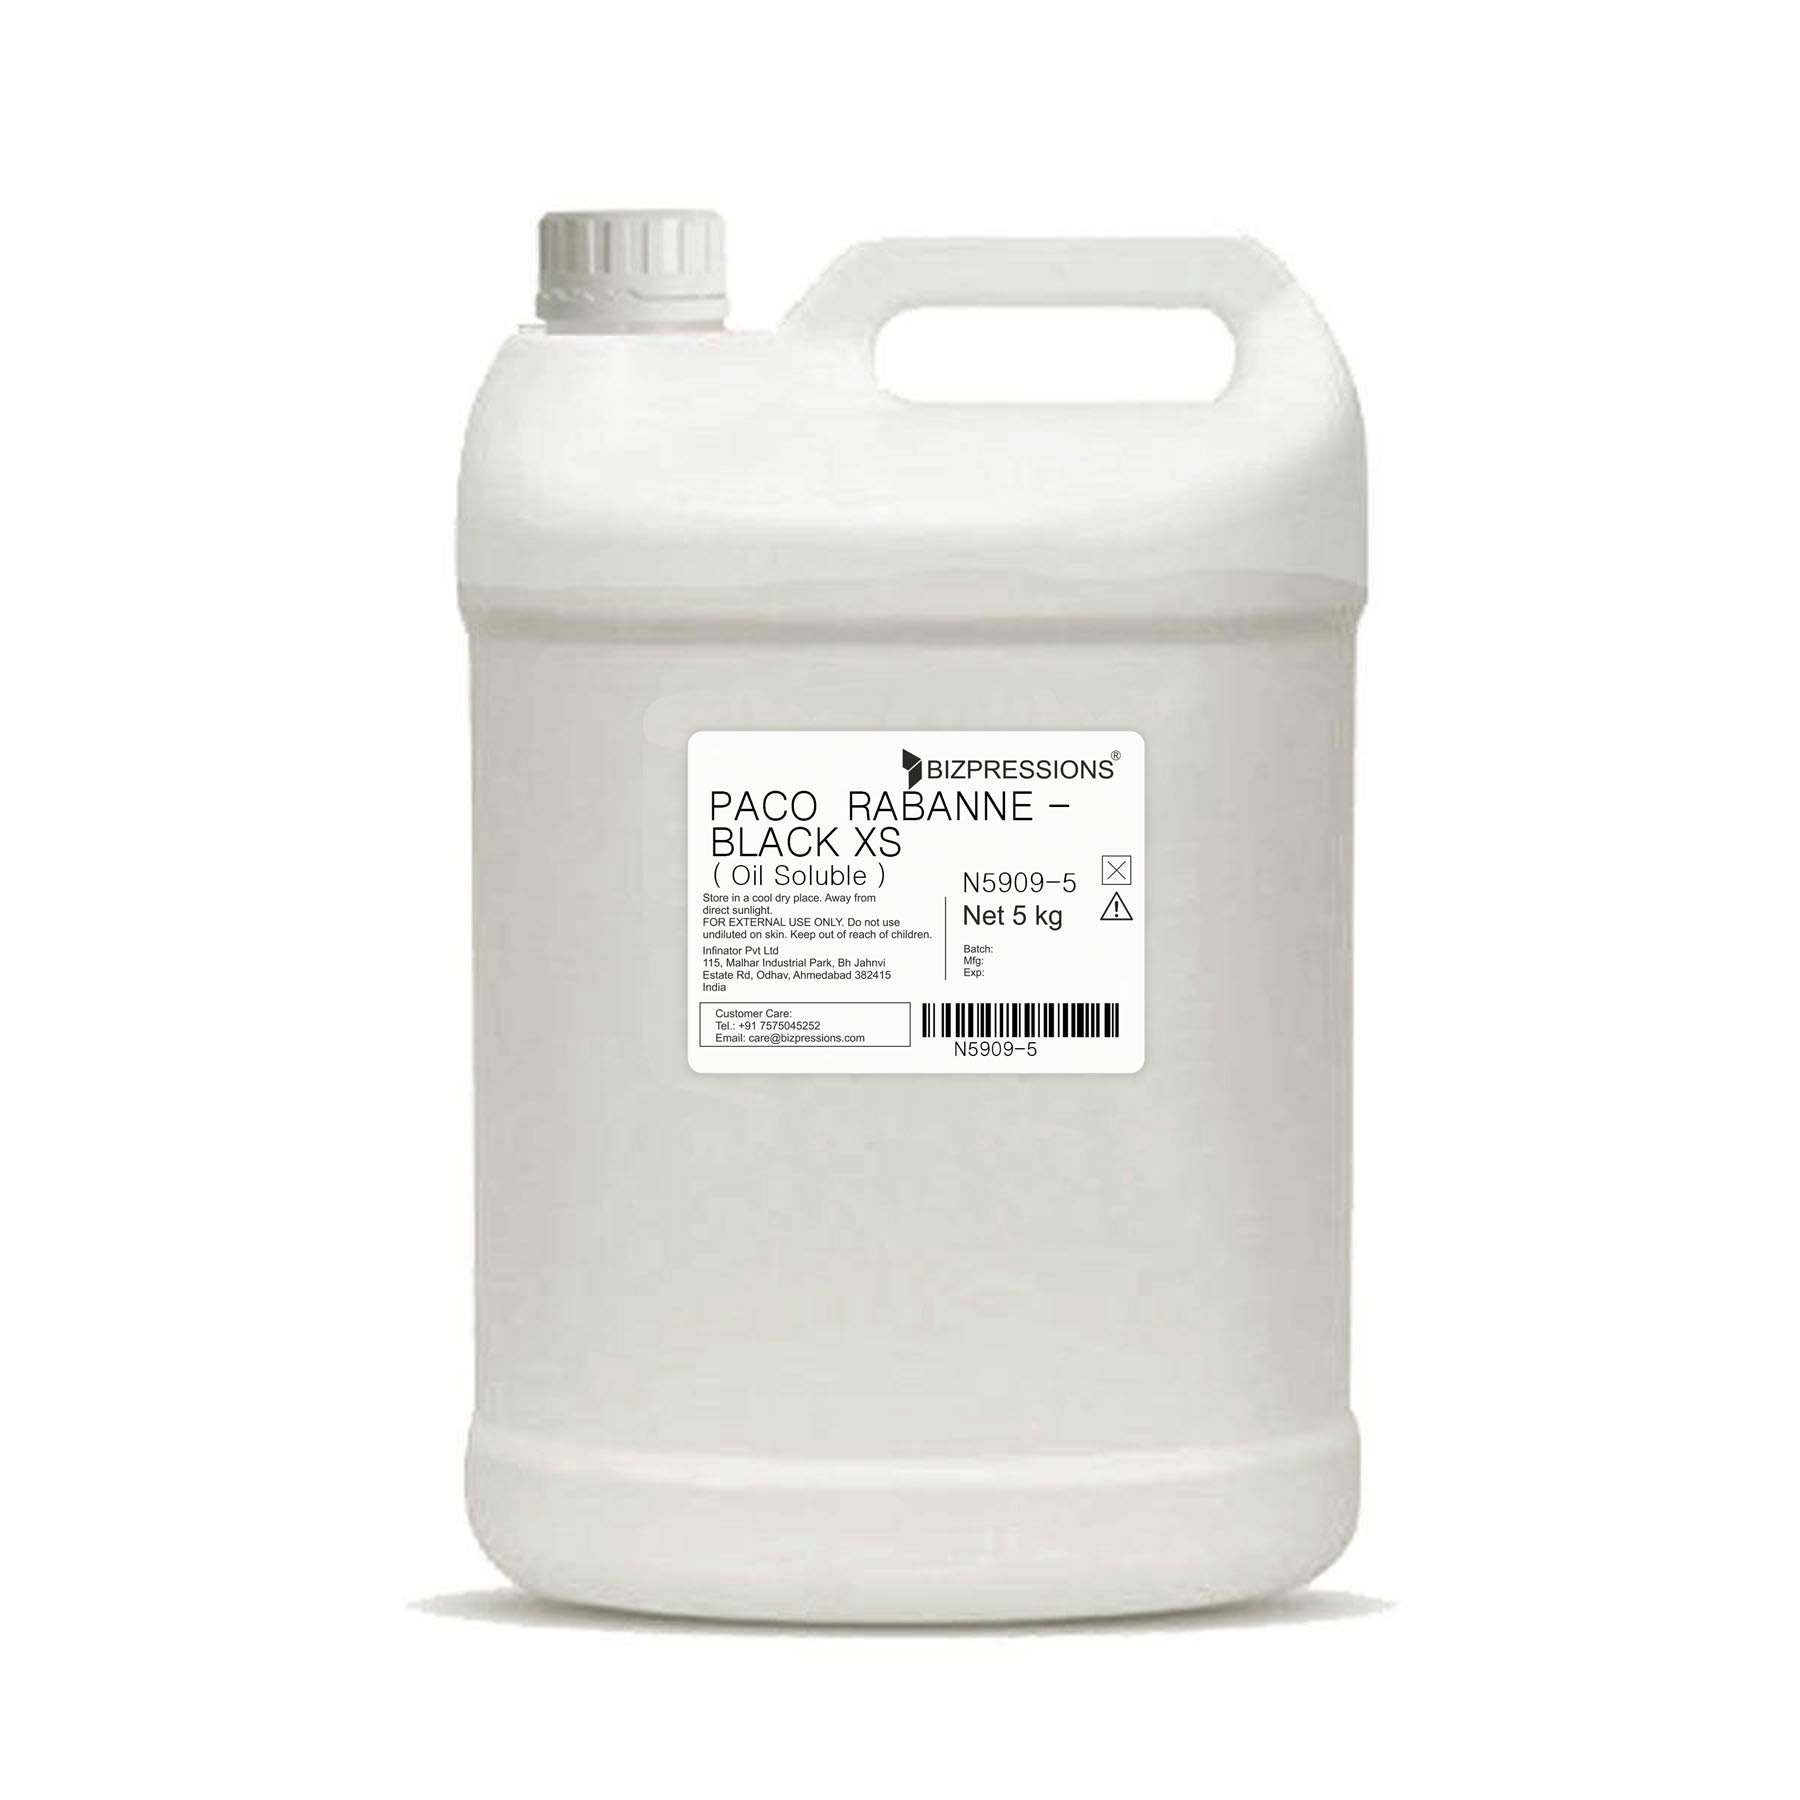 PACO RABANNE - BLACK XS - Fragrance ( Oil Soluble ) - 5 kg